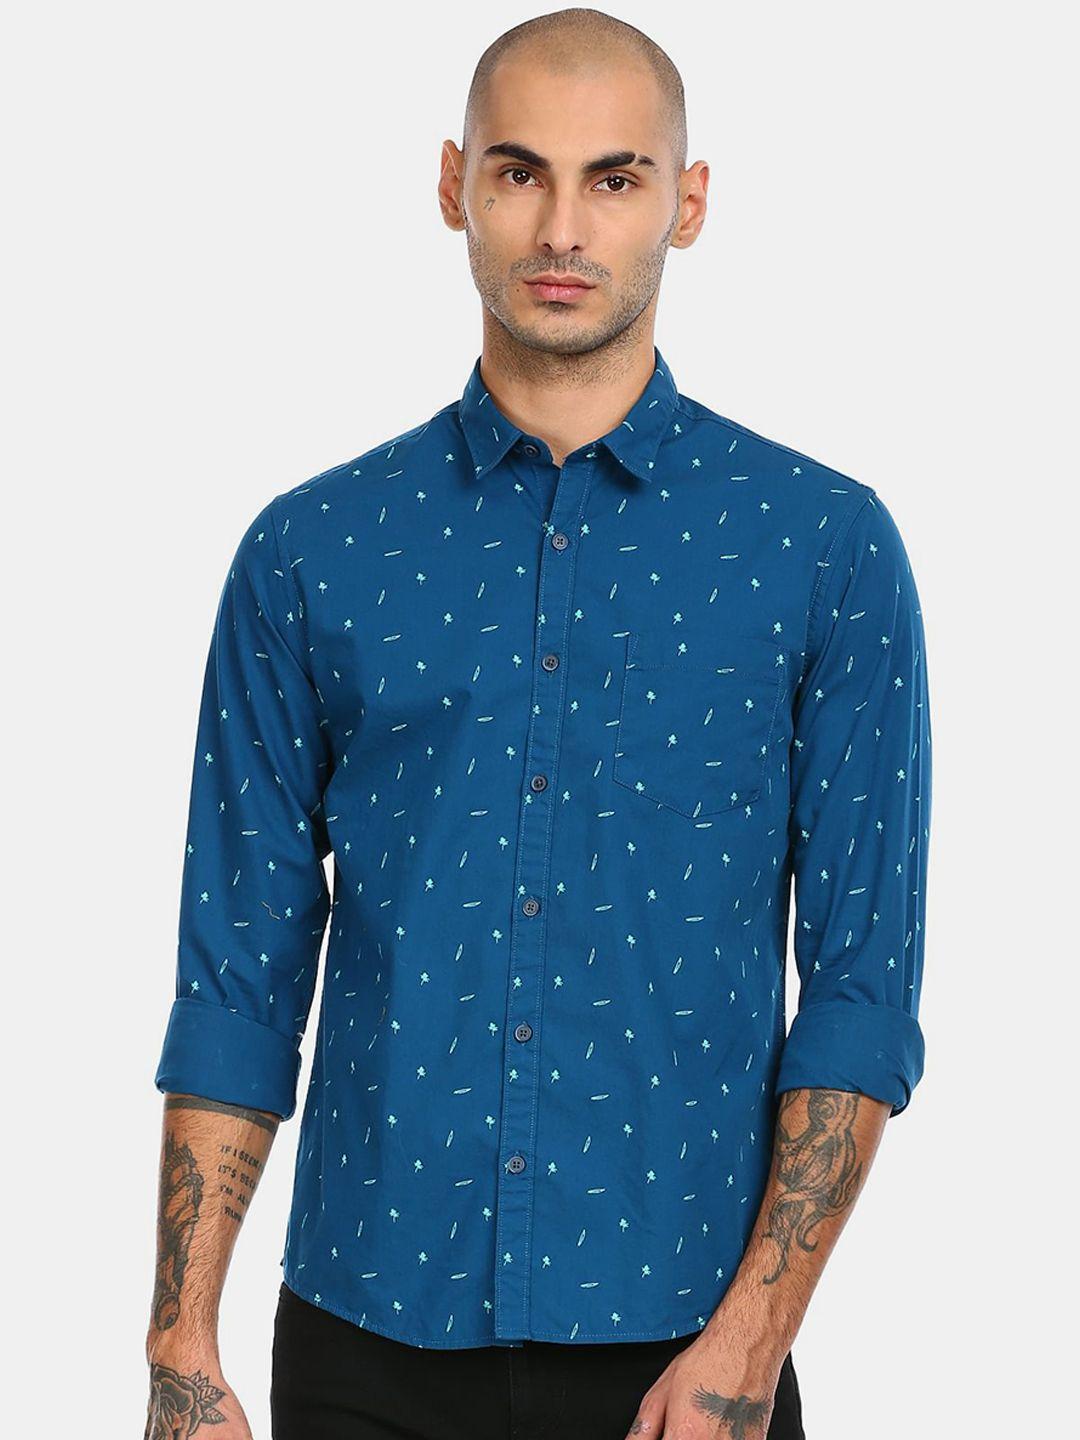 ruggers men blue & white printed cotton casual shirt